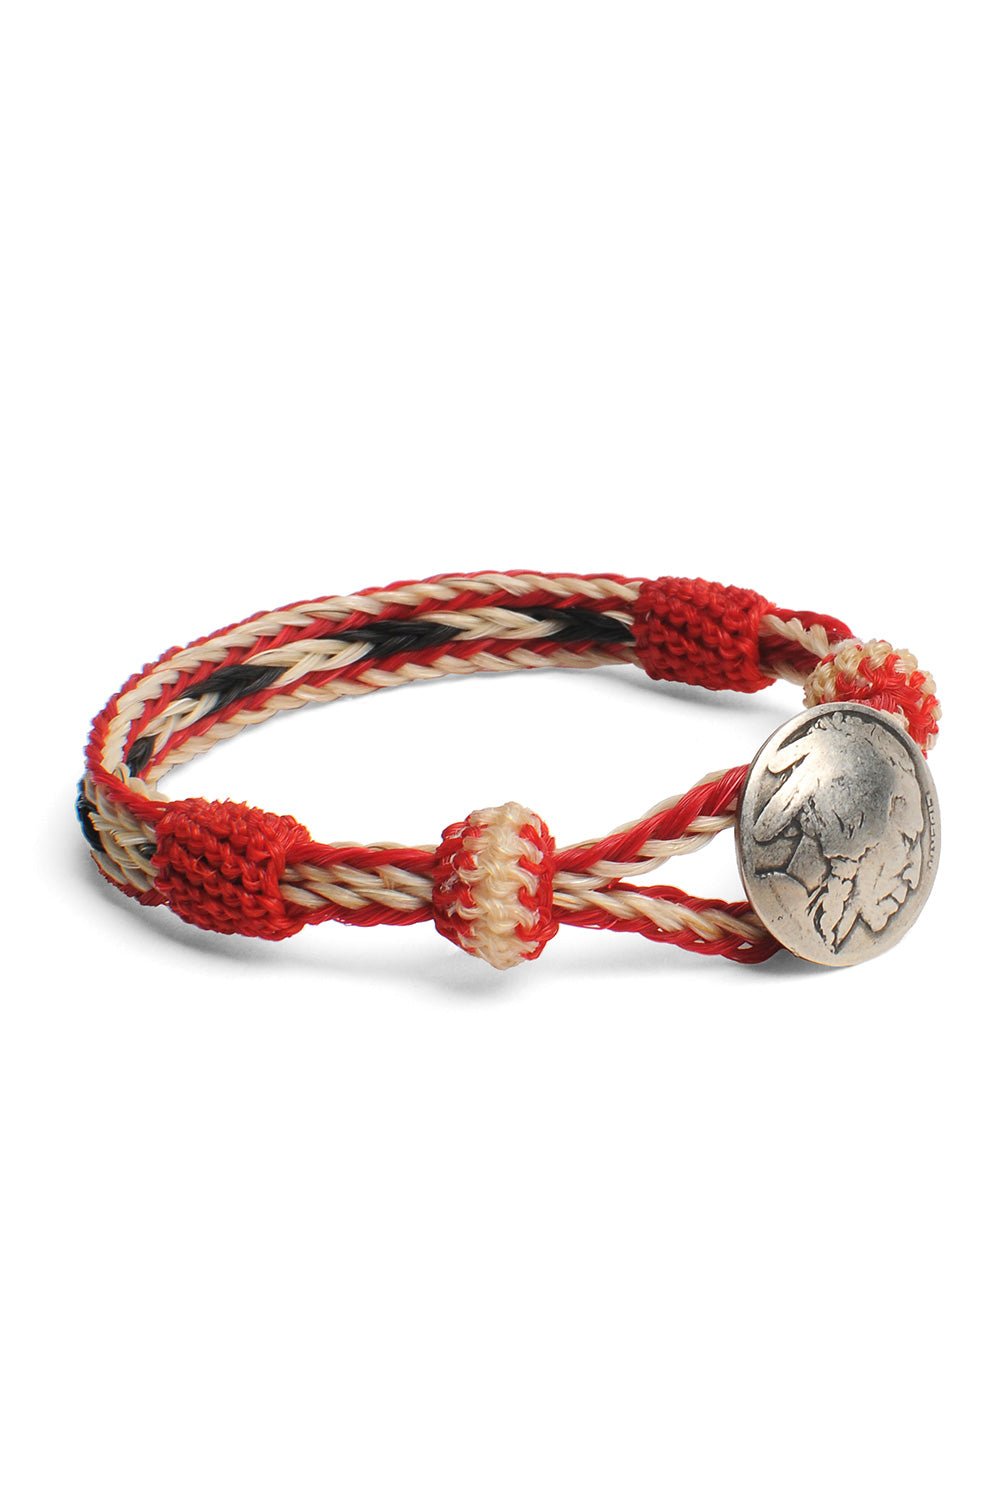 CHAMULA - Concho Bracelet | Hand-woven Horsehair | Red/White - HANSEN Garments